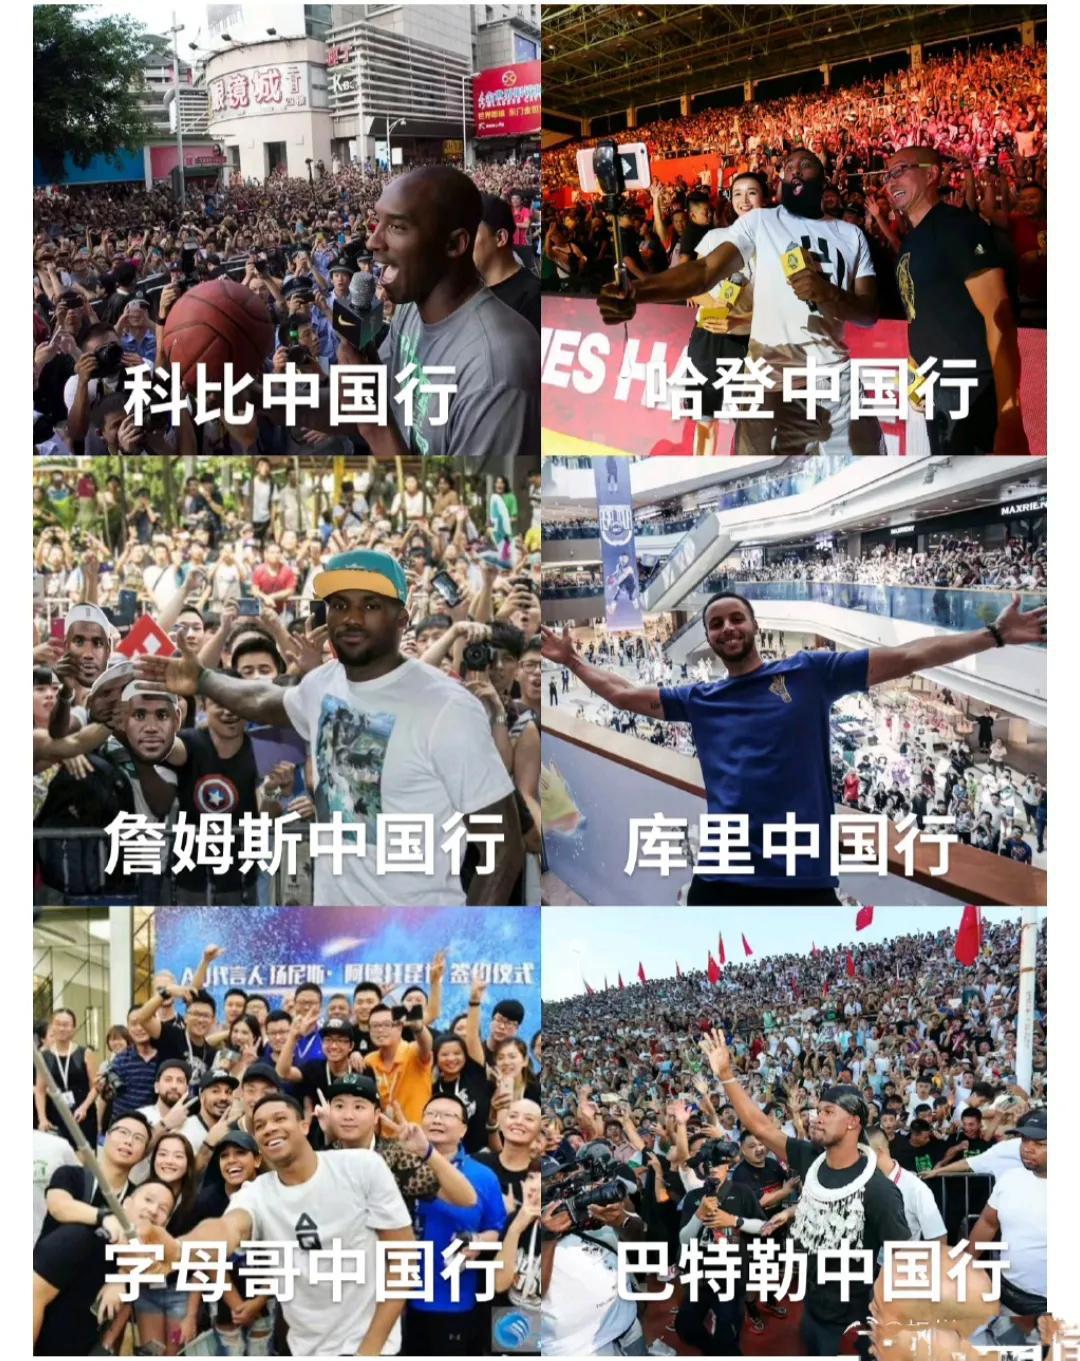 NBA中国行最火的球星是谁？

科比人气最顶流，当年走到哪都是水泄不通。

詹姆(1)